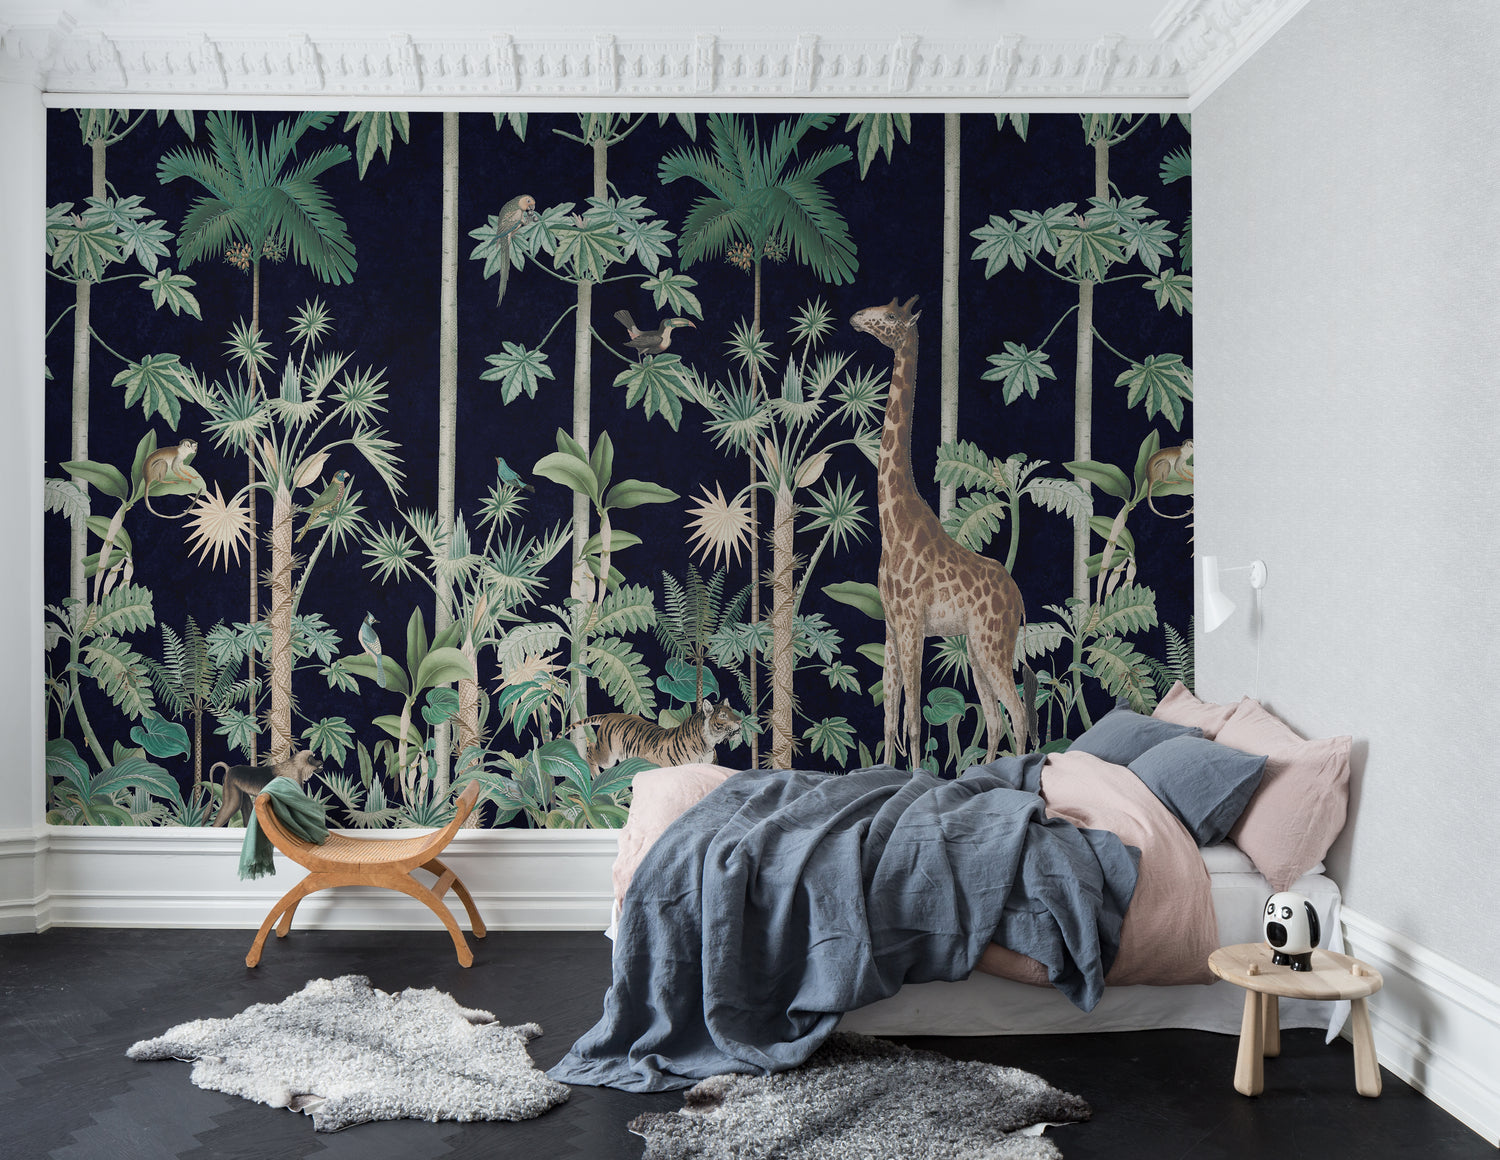 A Walk in the Jungle, Mural Wallpaper in bedroom